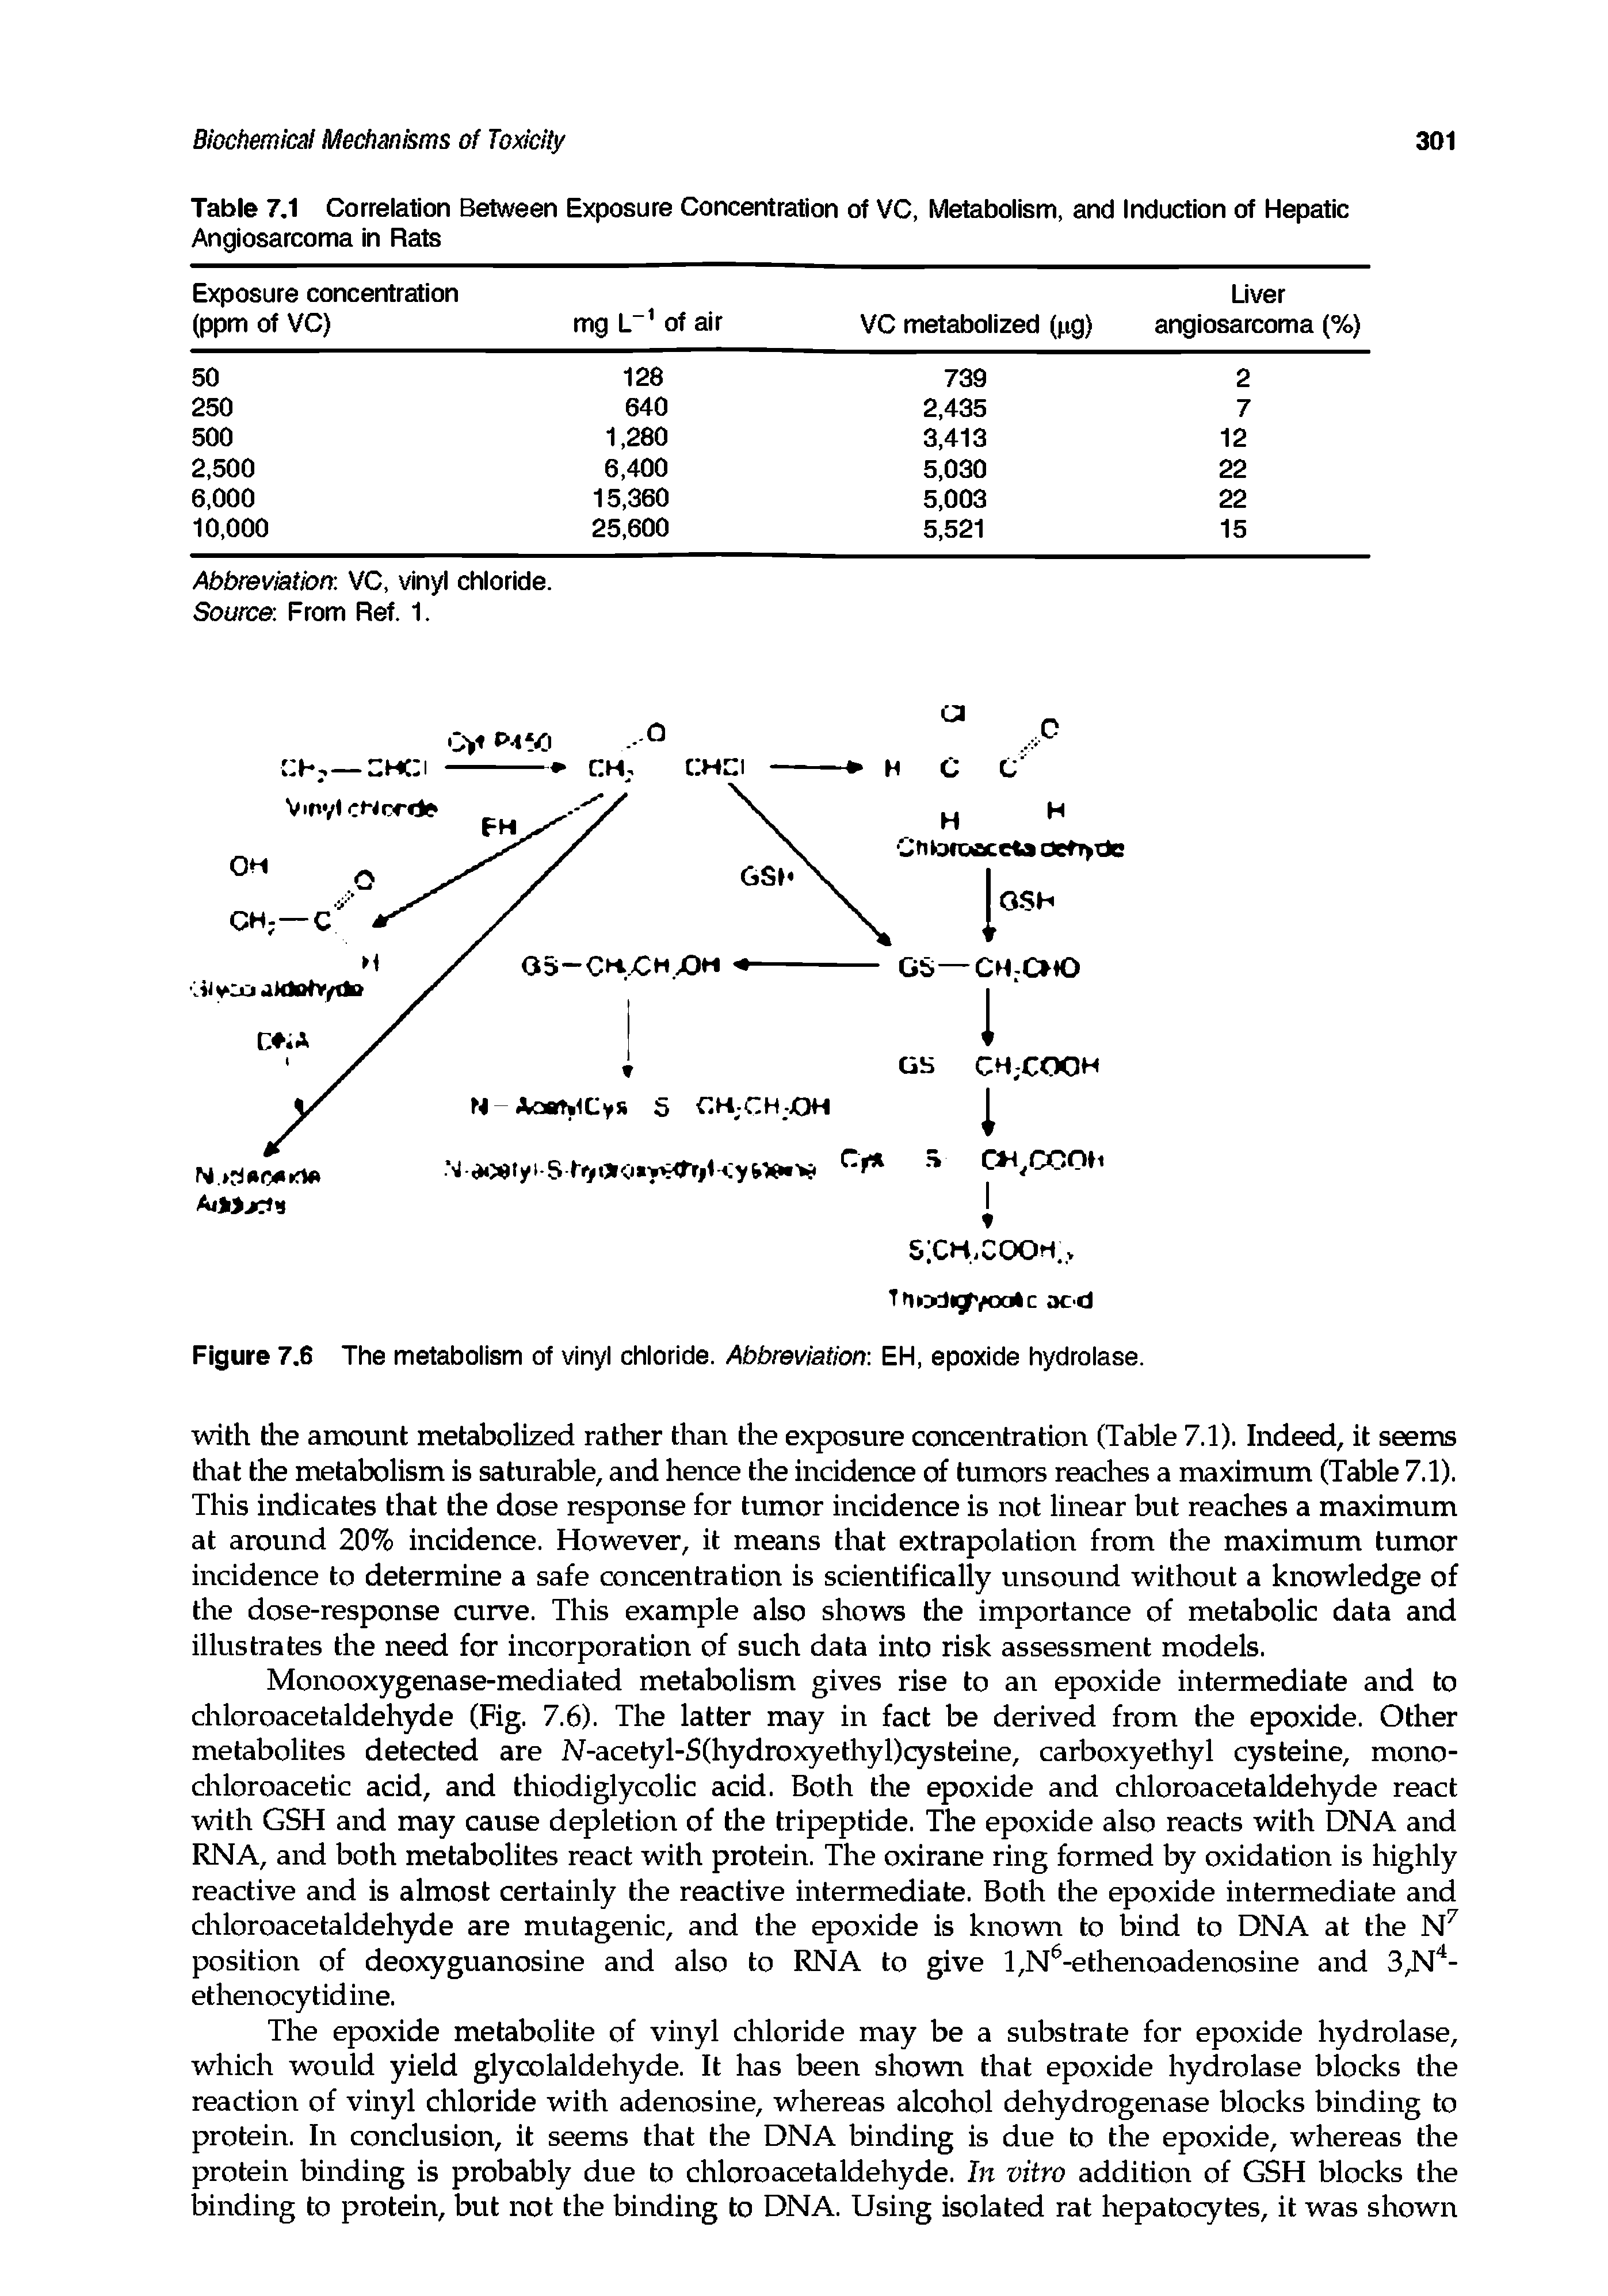 Figure 7.6 The metabolism of vinyl chloride. Abbreviation EH, epoxide hydrolase.